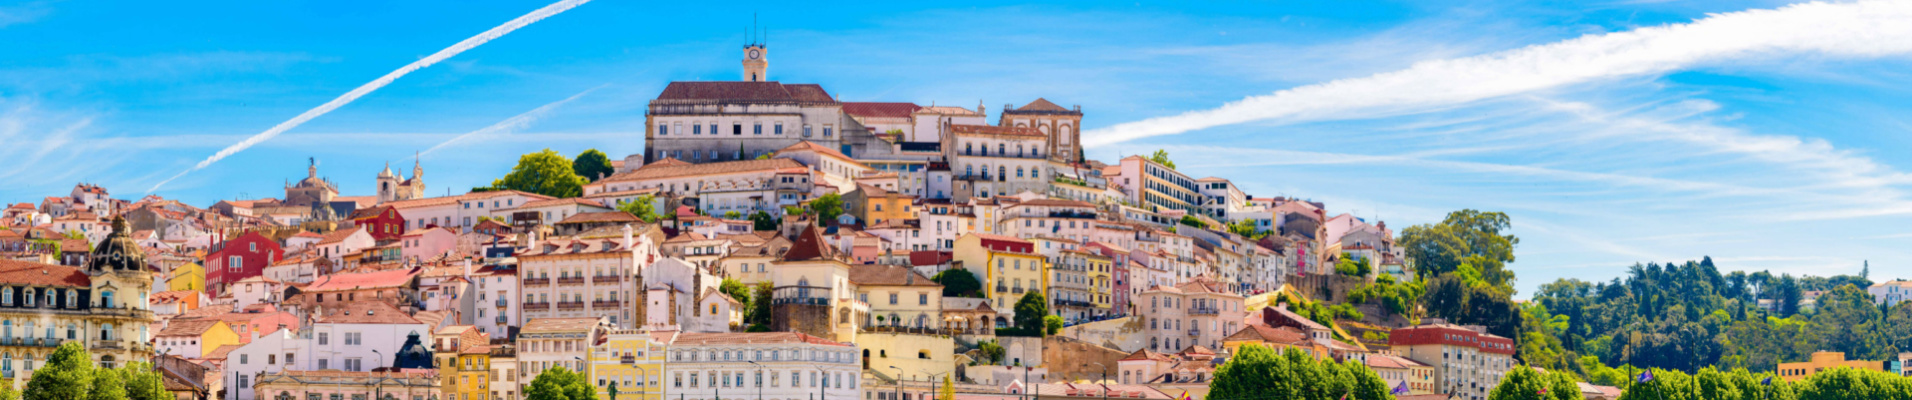 Vue sur Coimbra - Portugal